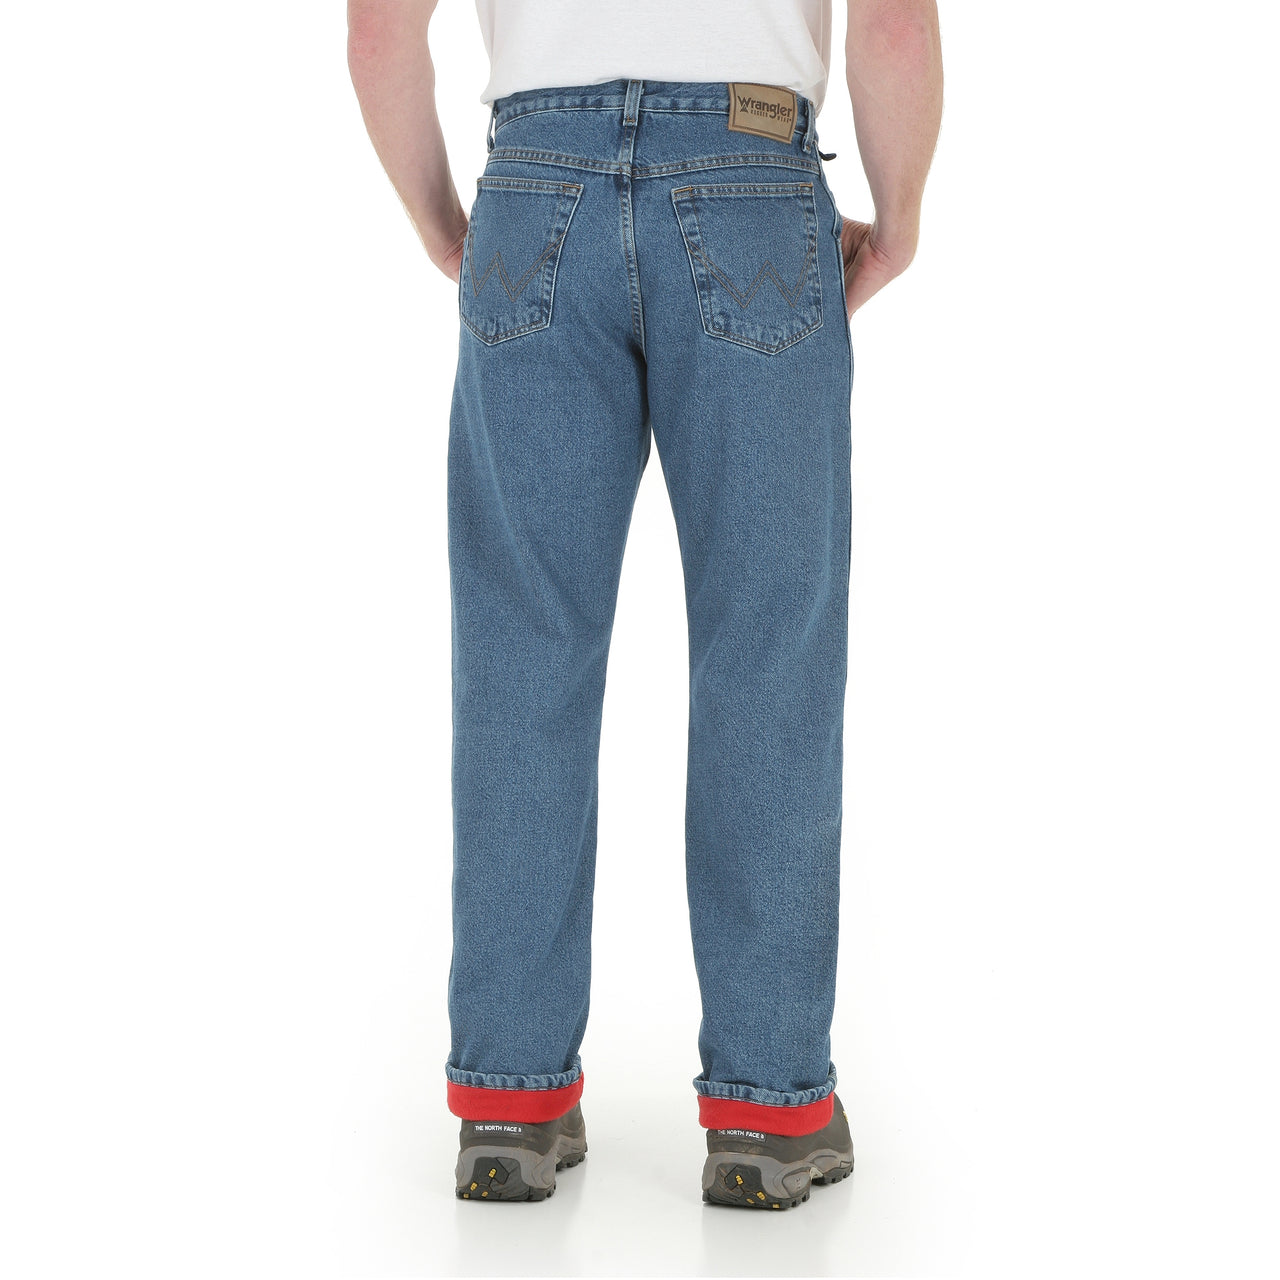 Wrangler Rugged Wear Thermal Men's Jeans - Stonewashed Denim w Red Lining